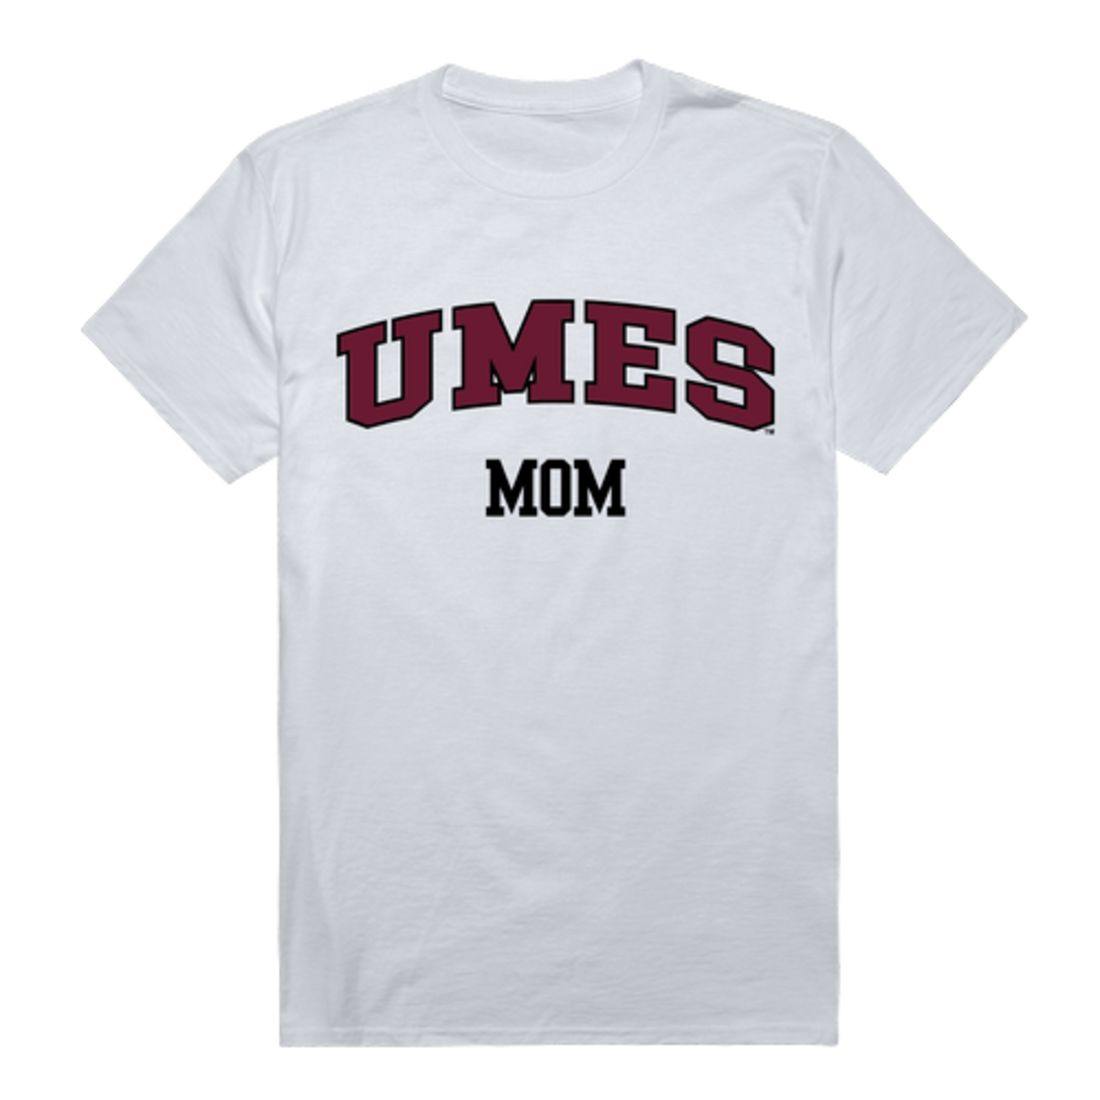 UMES University of Maryland Eastern Shore Hawks College Mom Womens T-Shirt-Campus-Wardrobe